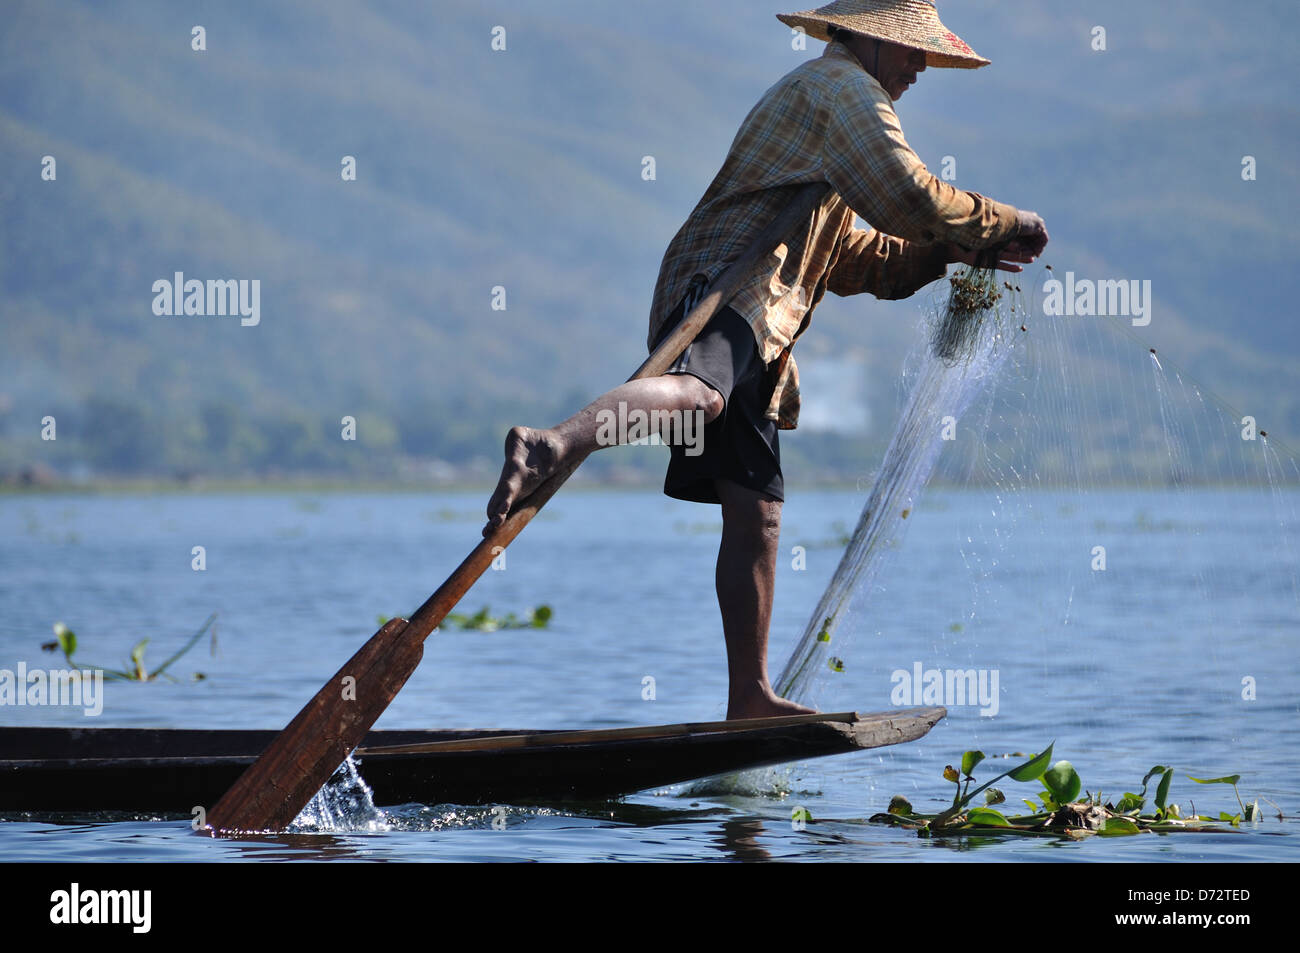 Inle Lake Fisherman Using Unique Leg-Rowing Technique Stock Photo